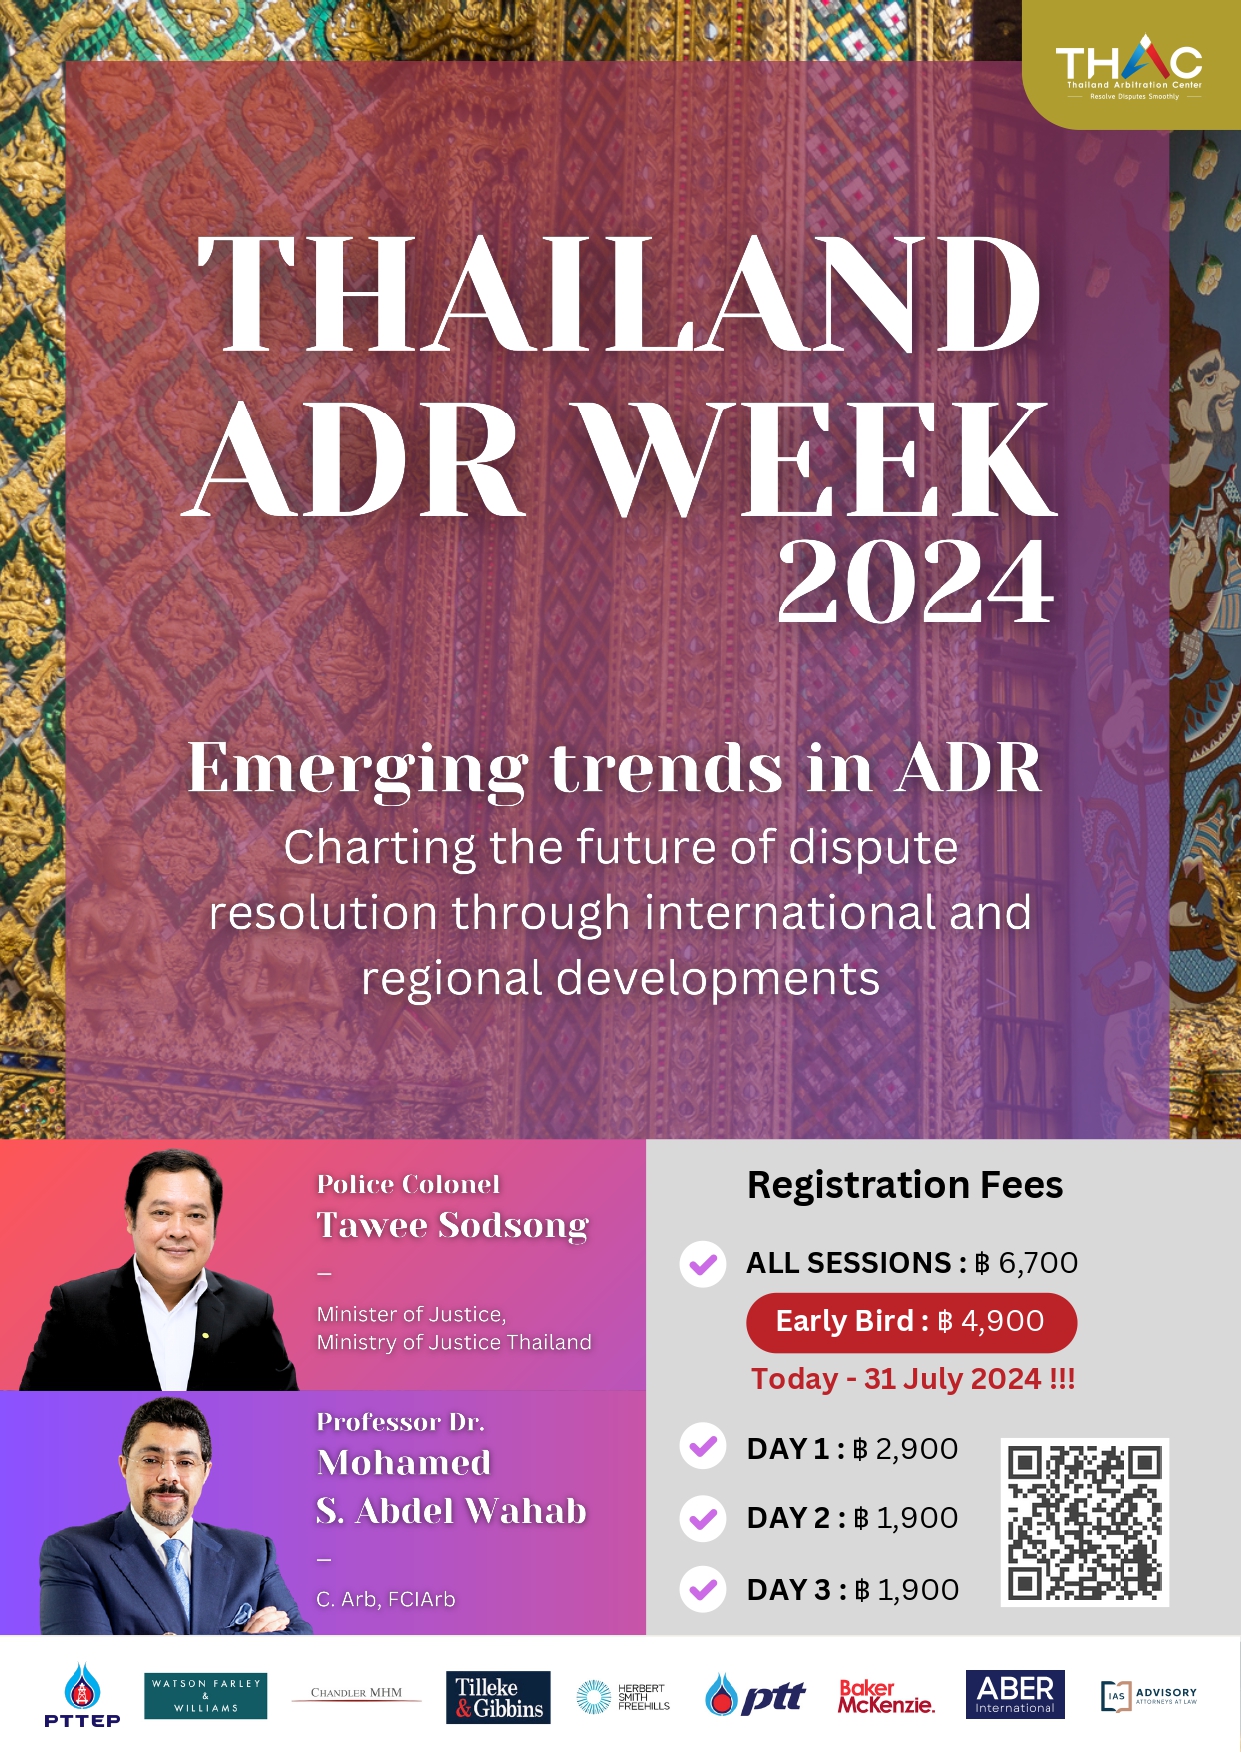 THAILAND ADR WEEK 2024